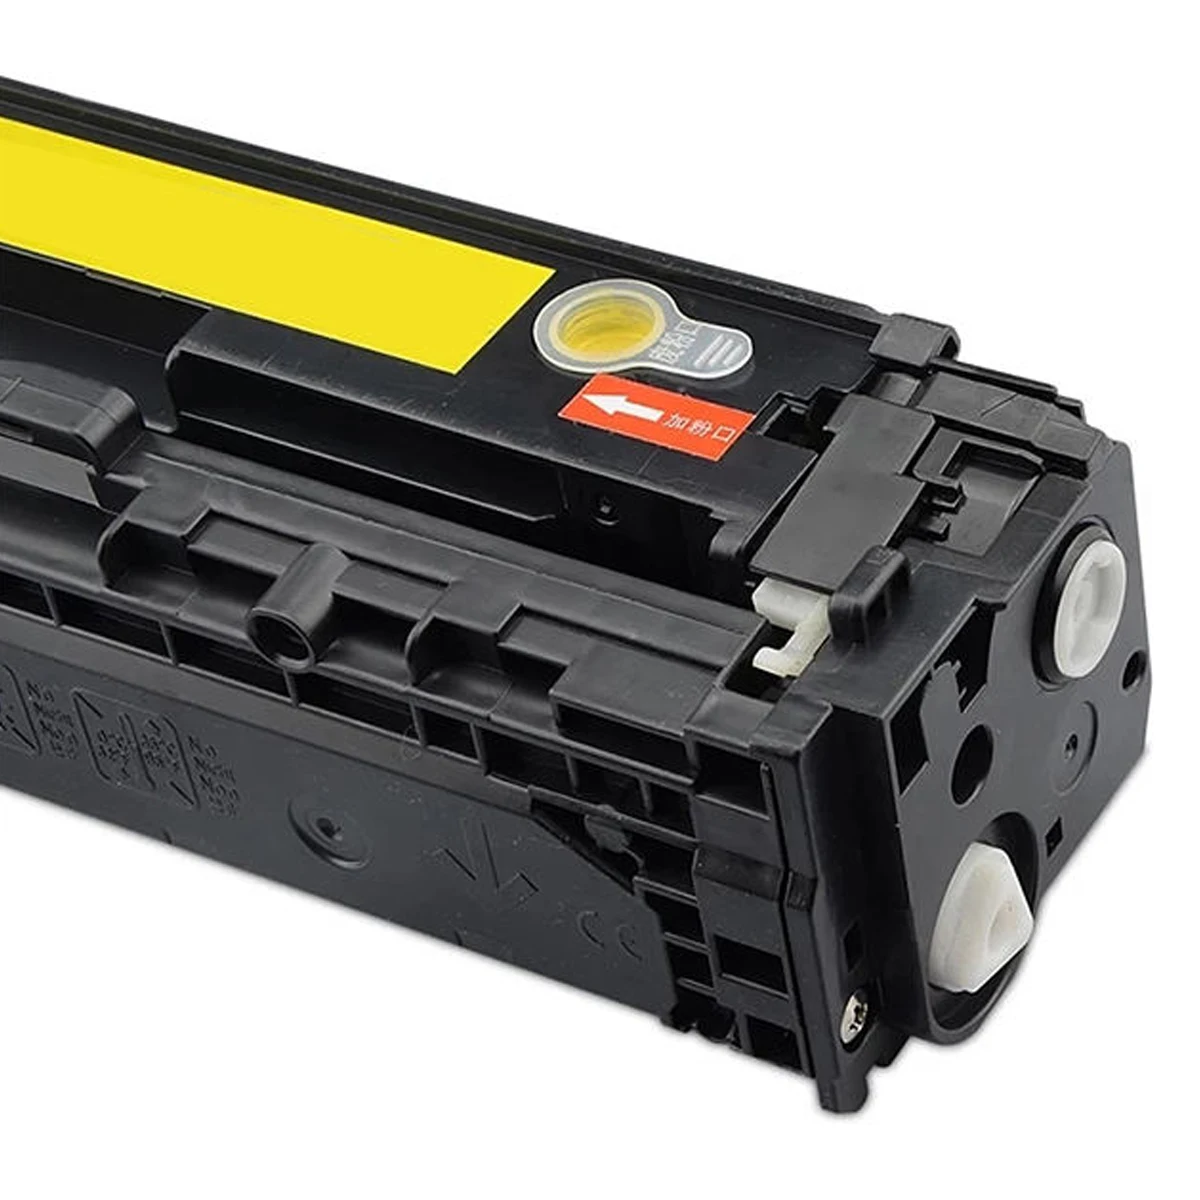 Toner Cartridge FOR HP Color LaserJet Pro M180 M180n M181fw M154 M180nw M181 M180n CF-530A CF-531A CF-532A CF-533A 205A CF-510A